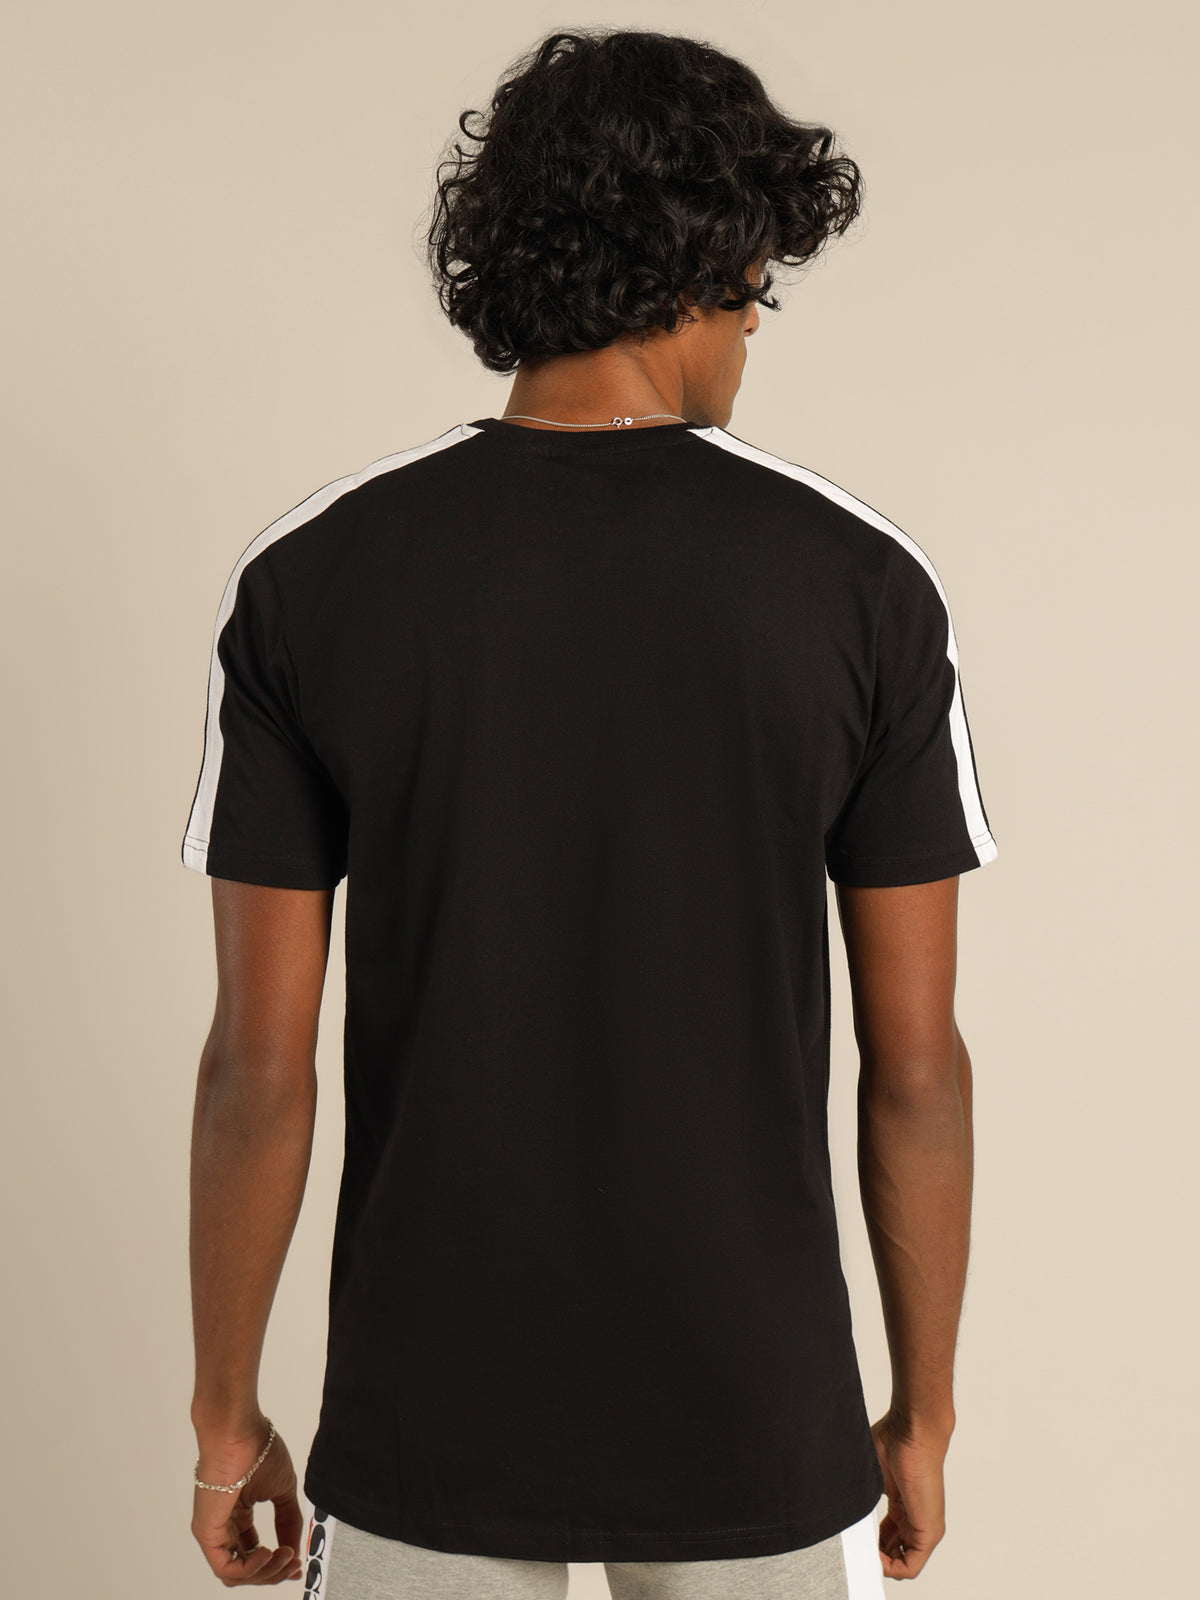 Carcano T-Shirt in Black